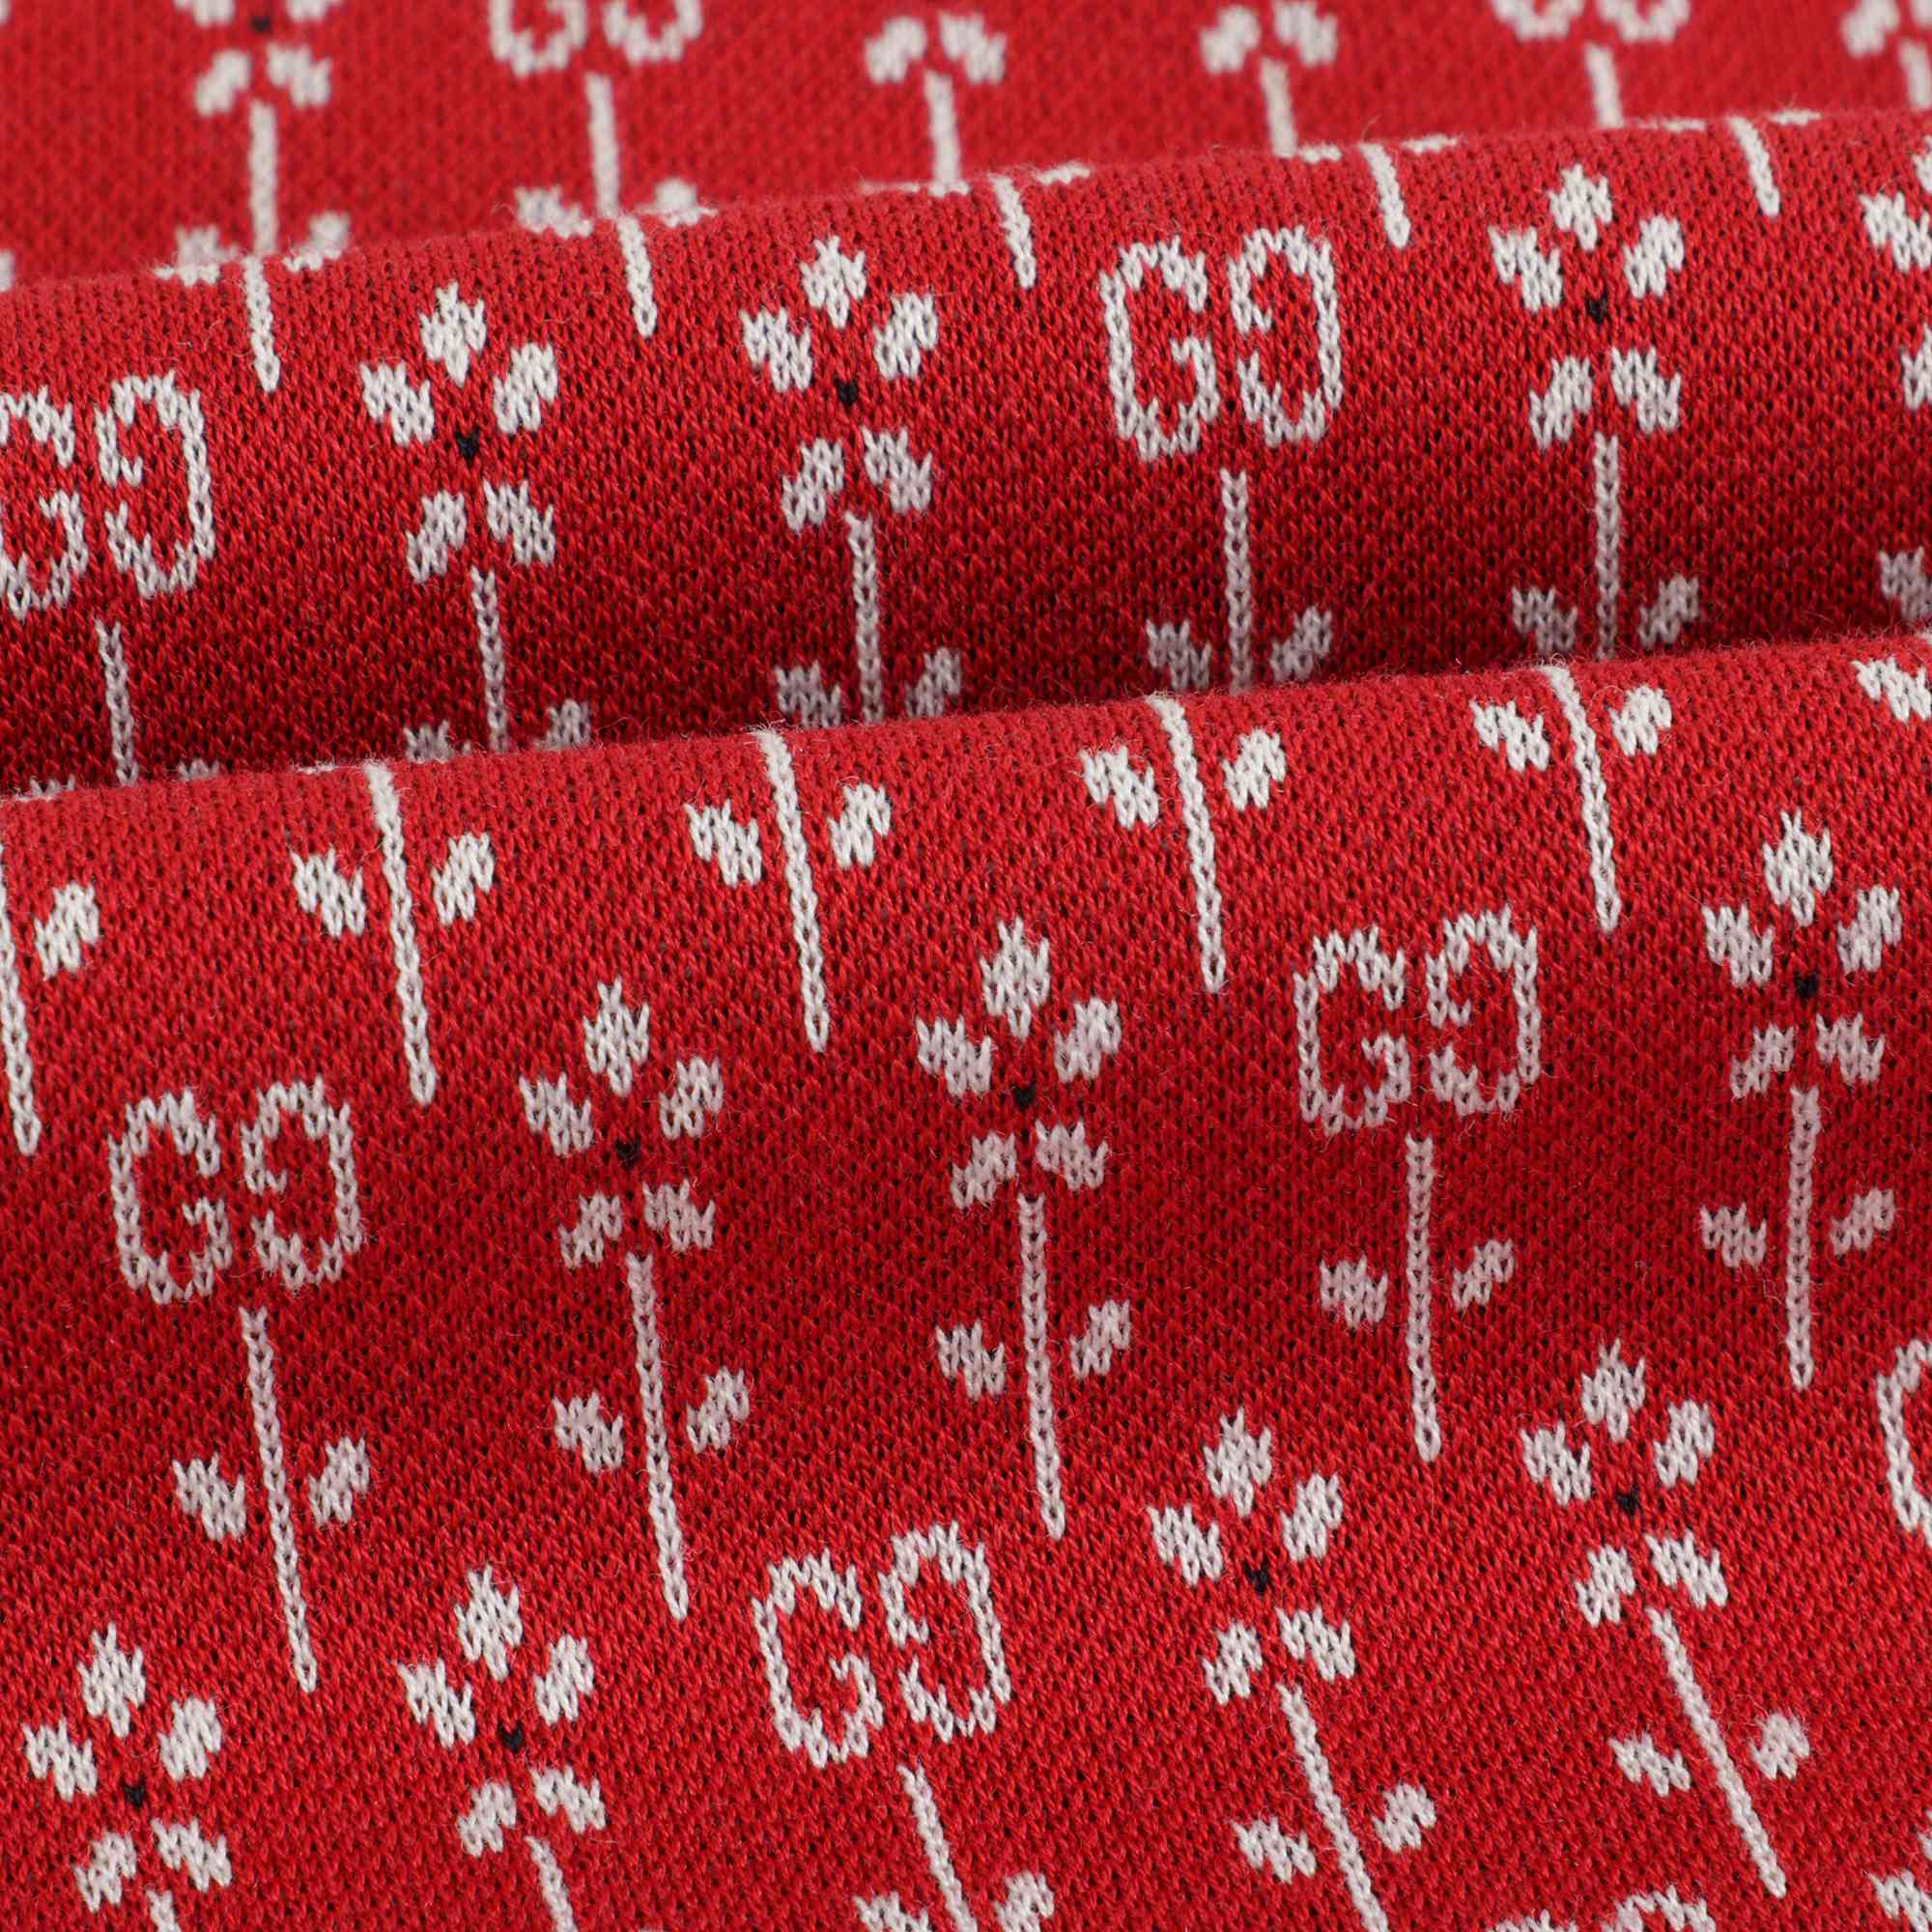 Girls Red GG Logo Cotton Dress